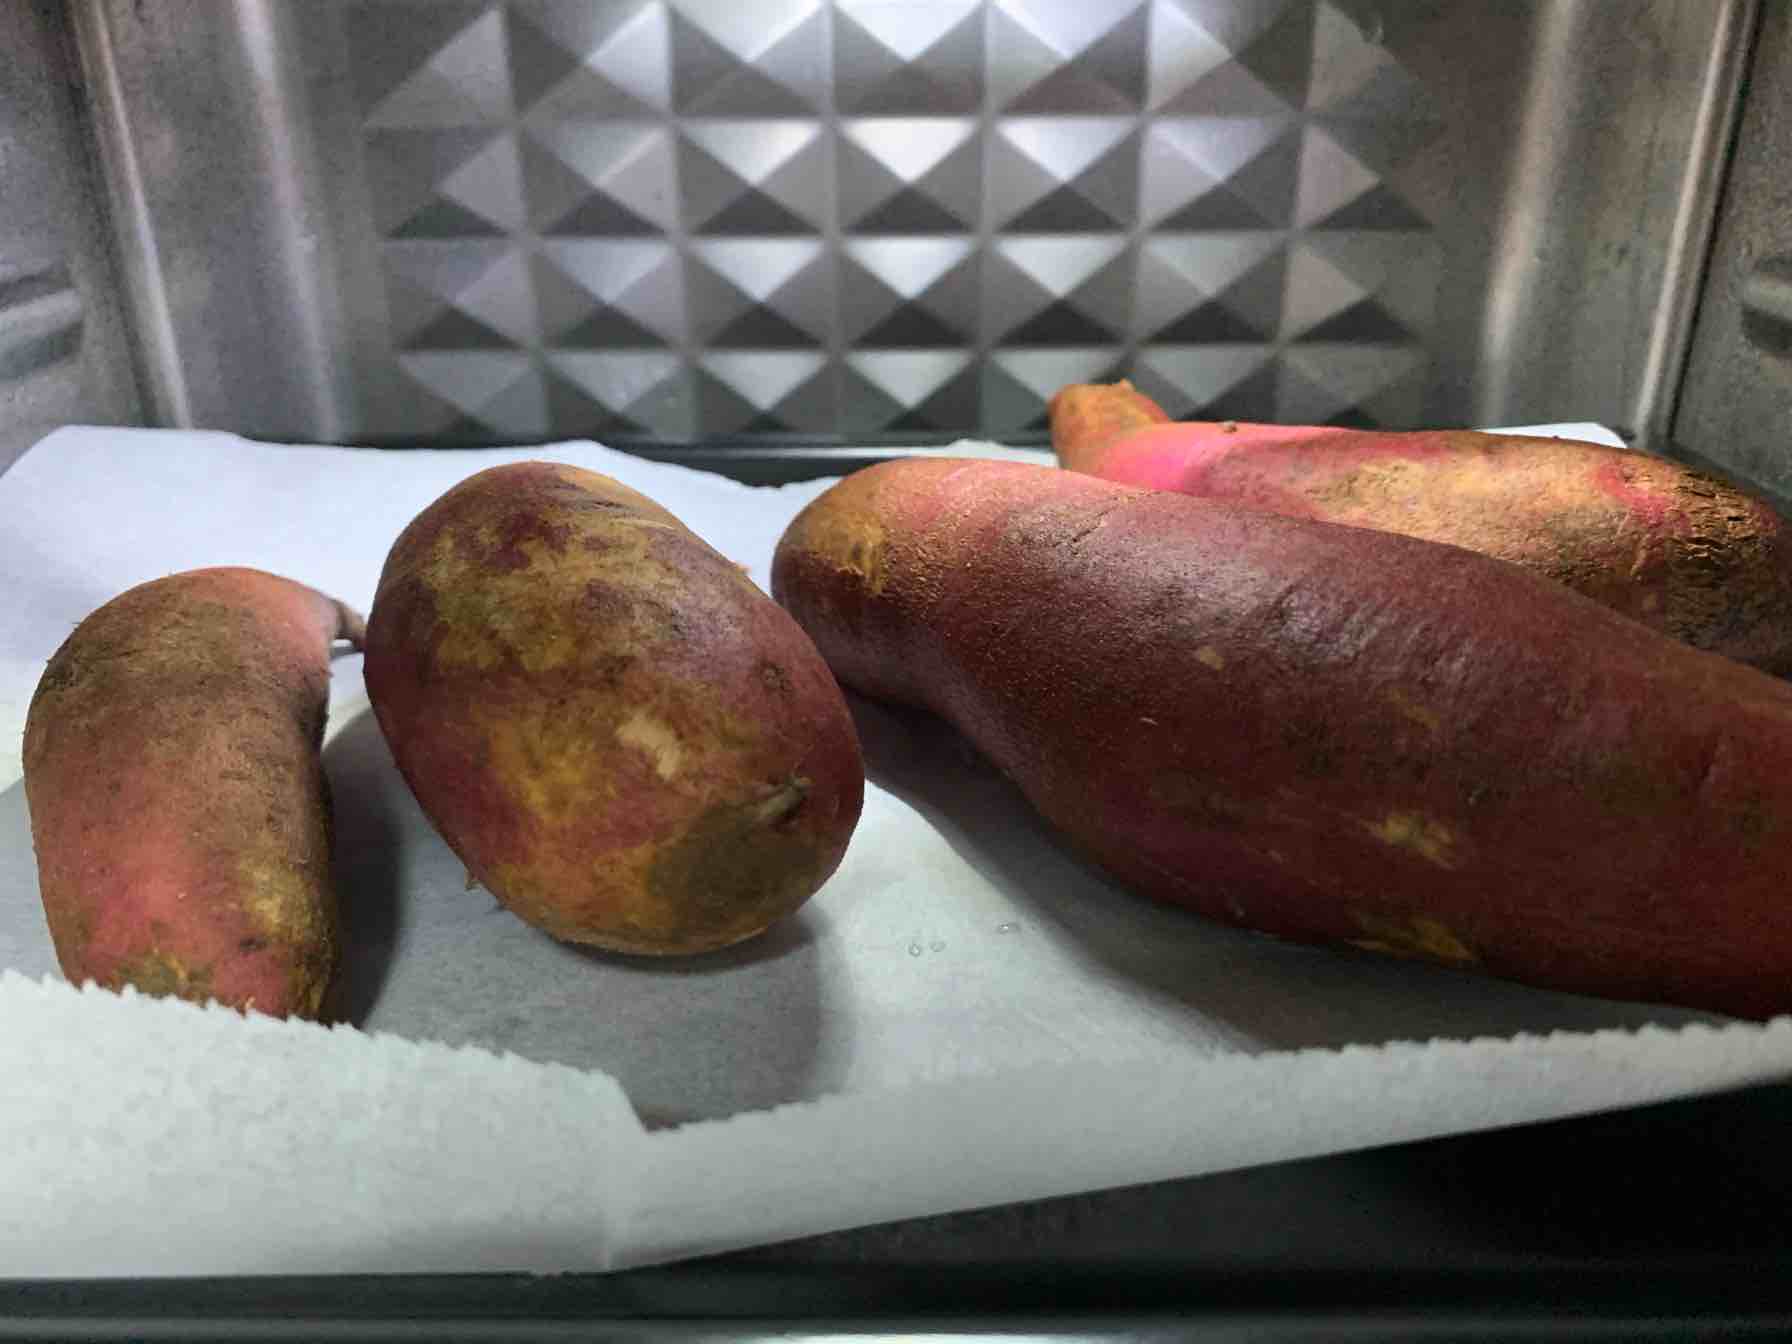 Roasted Sweet Potato recipe